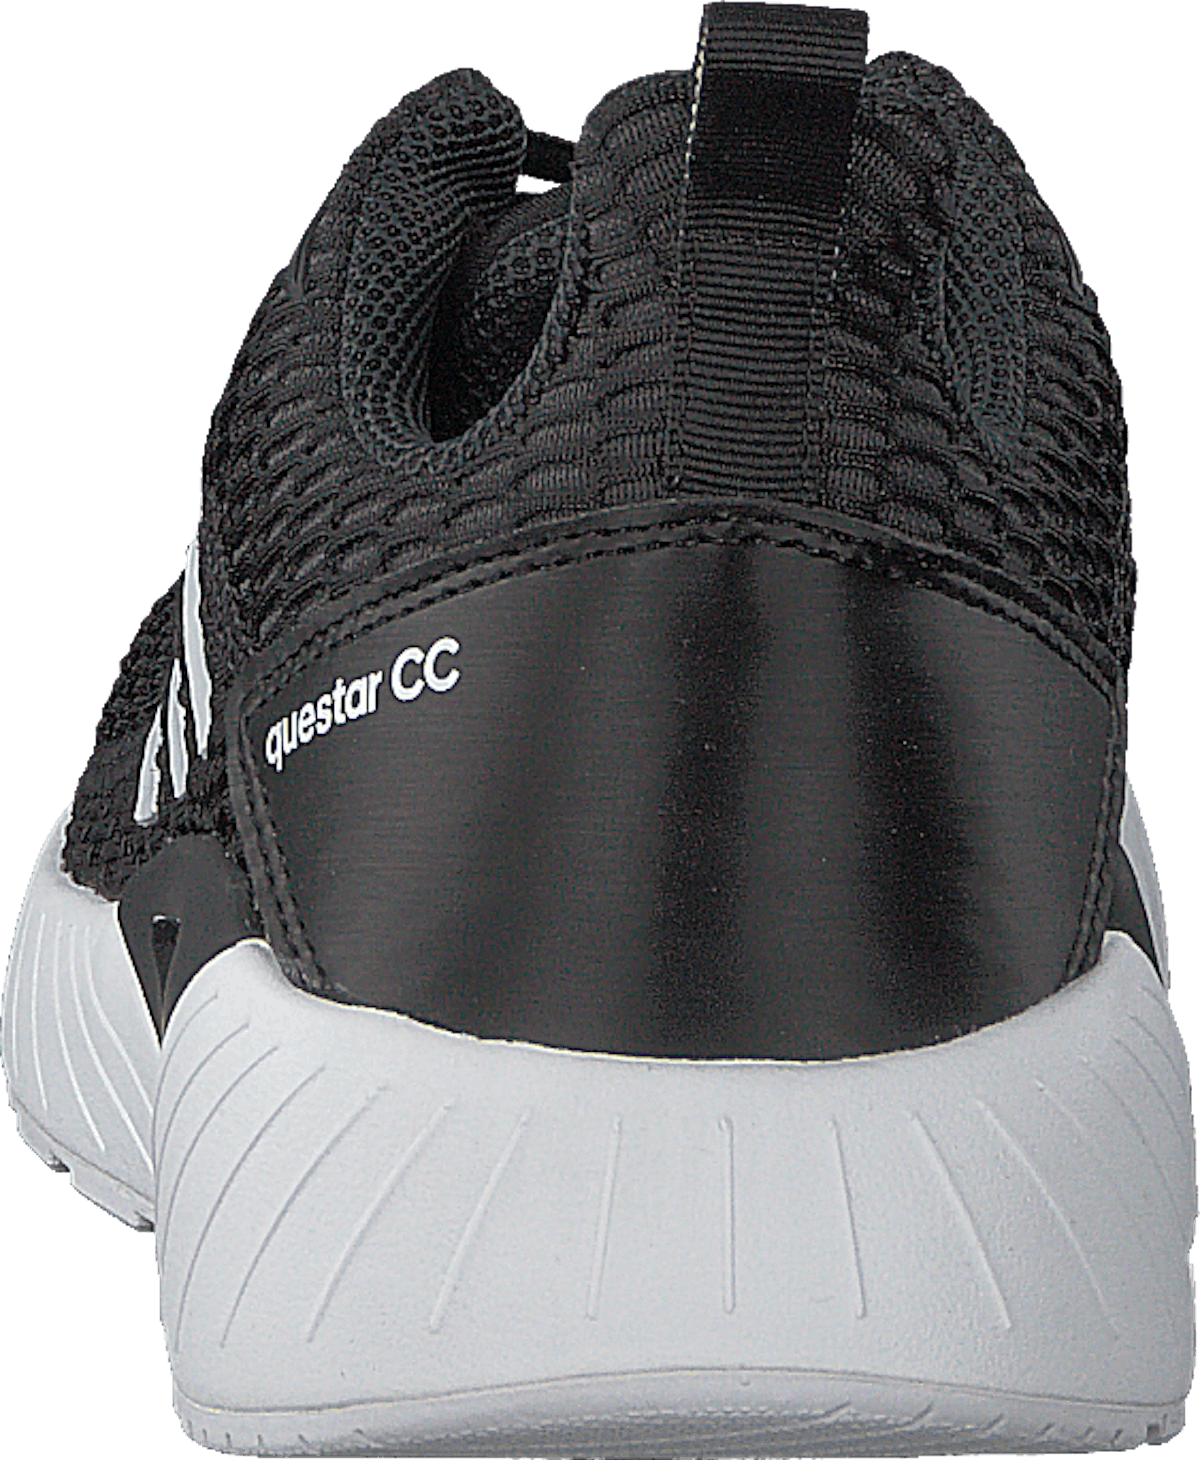 Questar Cc Core Black/Carbon S18